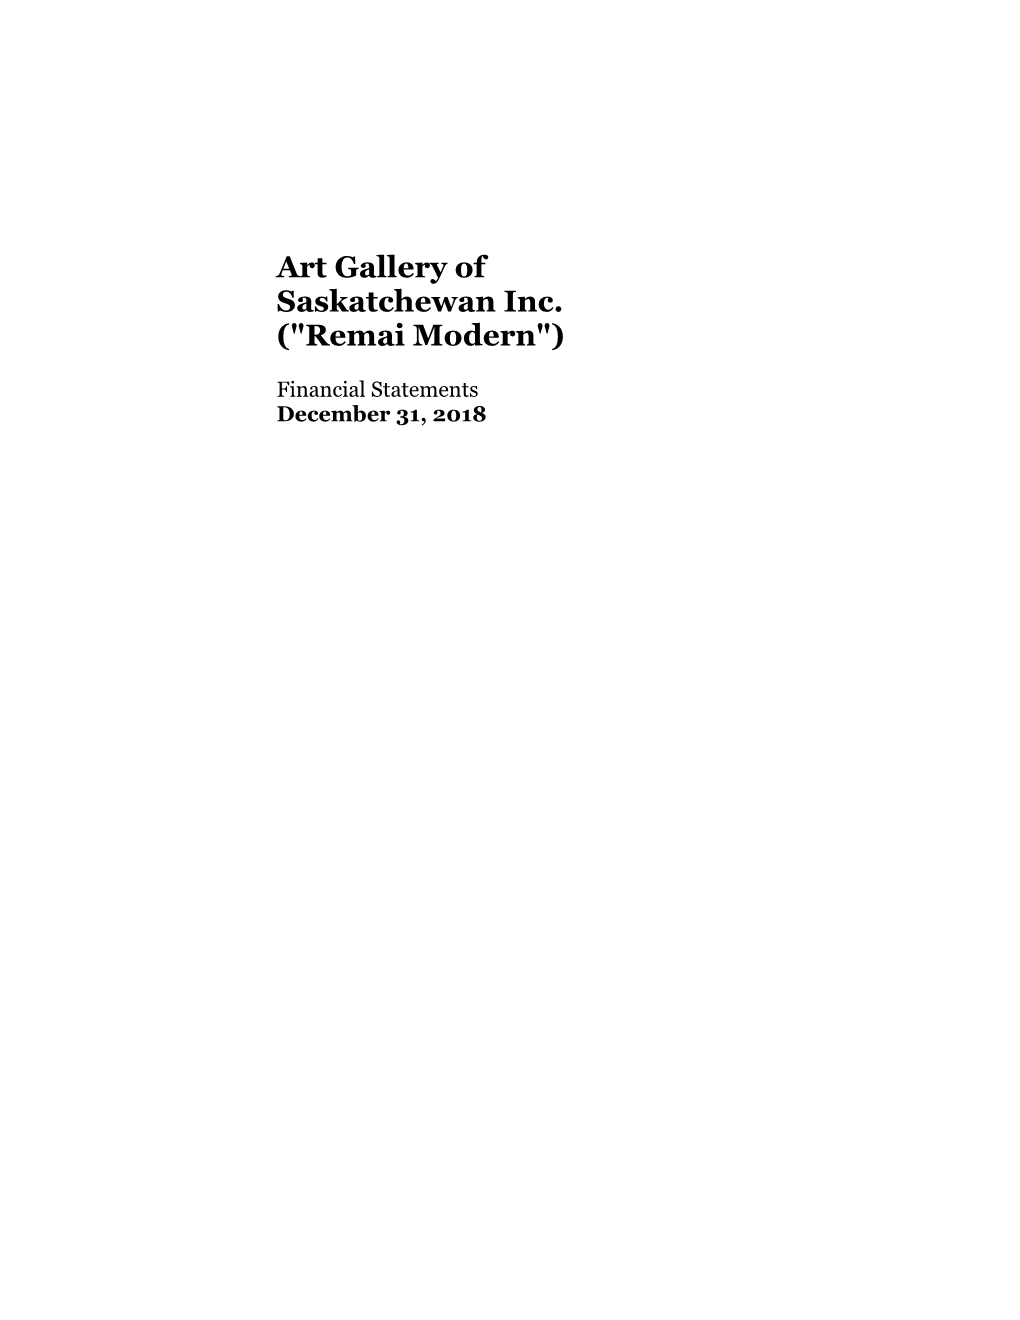 Art Gallery of Saskatchewan Inc. ("Remai Modern")